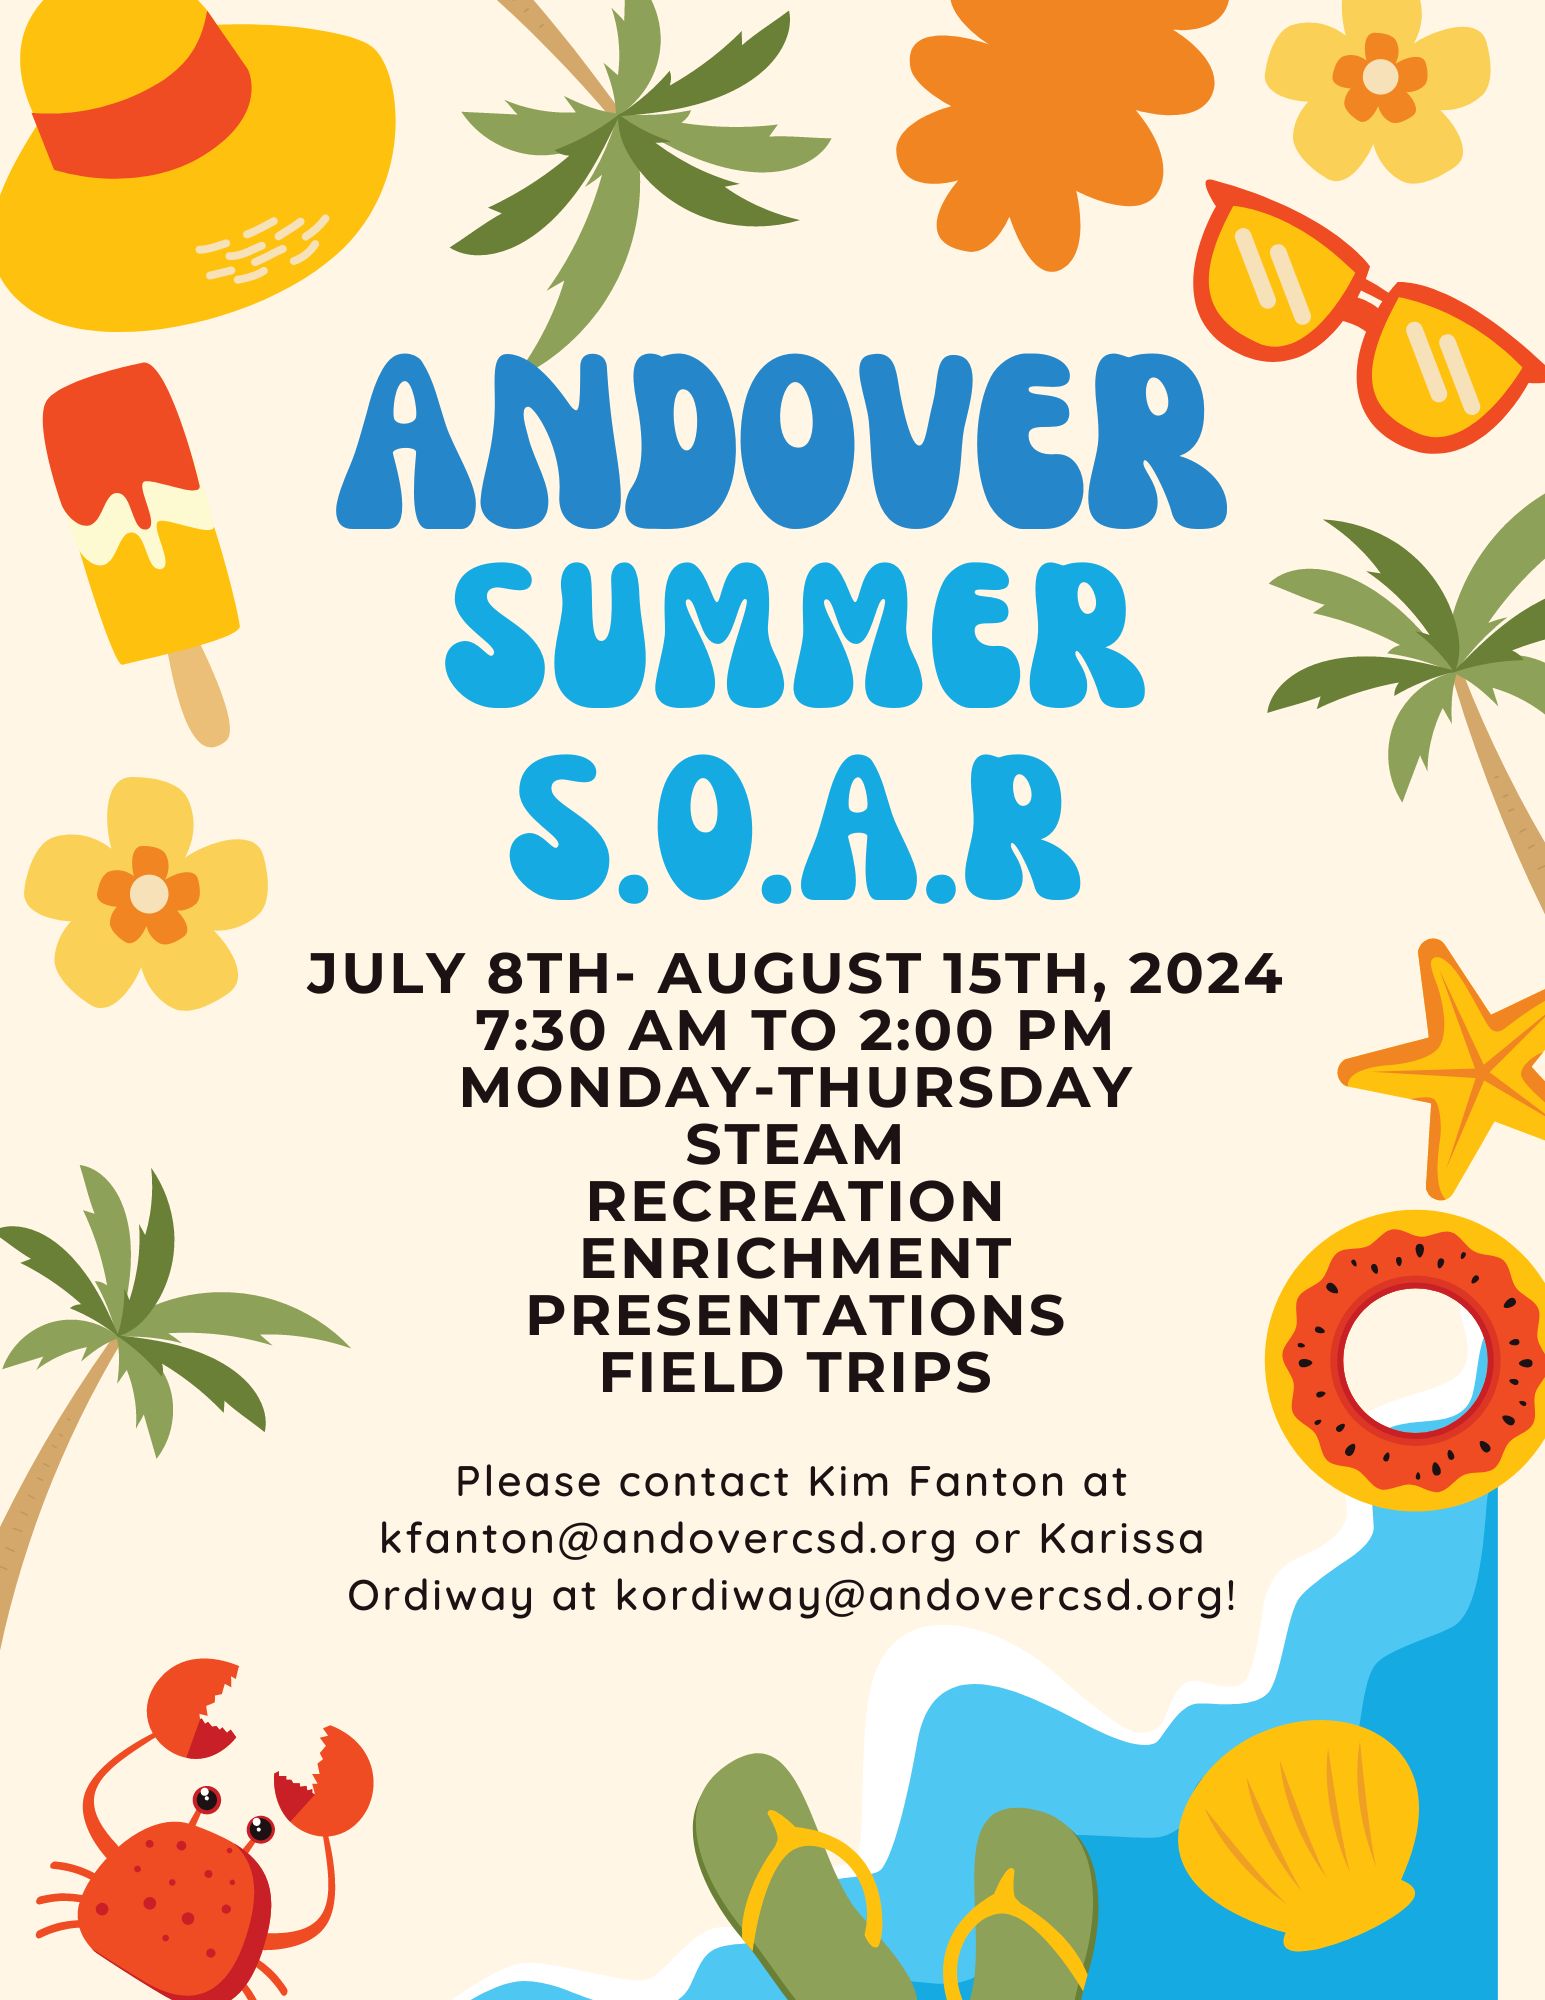 Andover Summer SOAR 2024